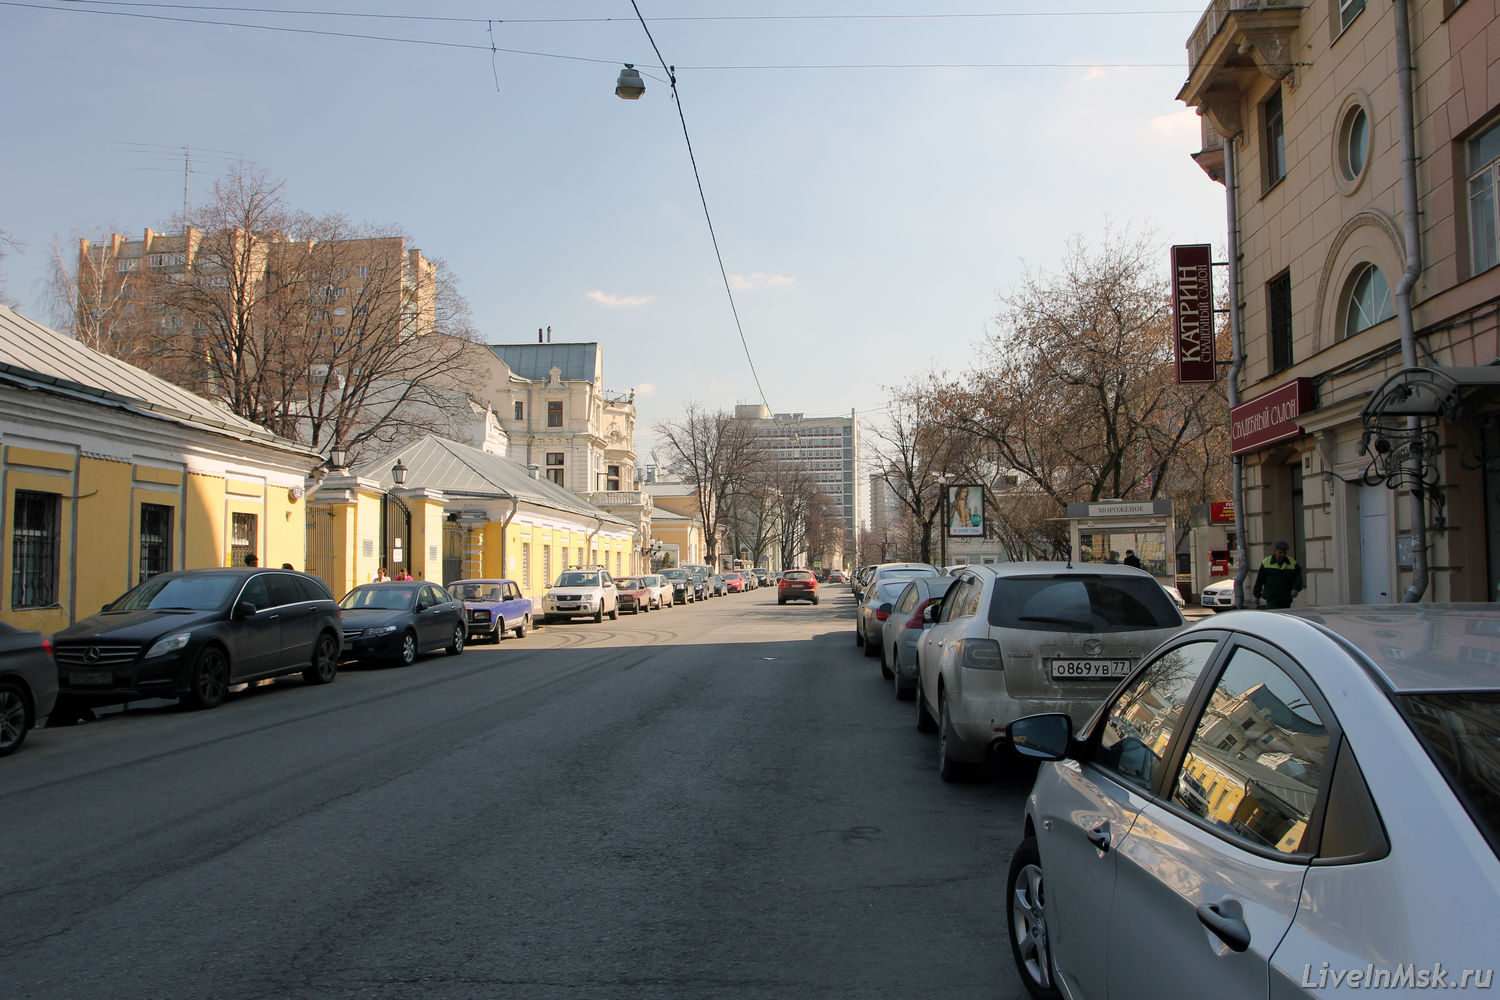 Поварская улица, фото 2015 года